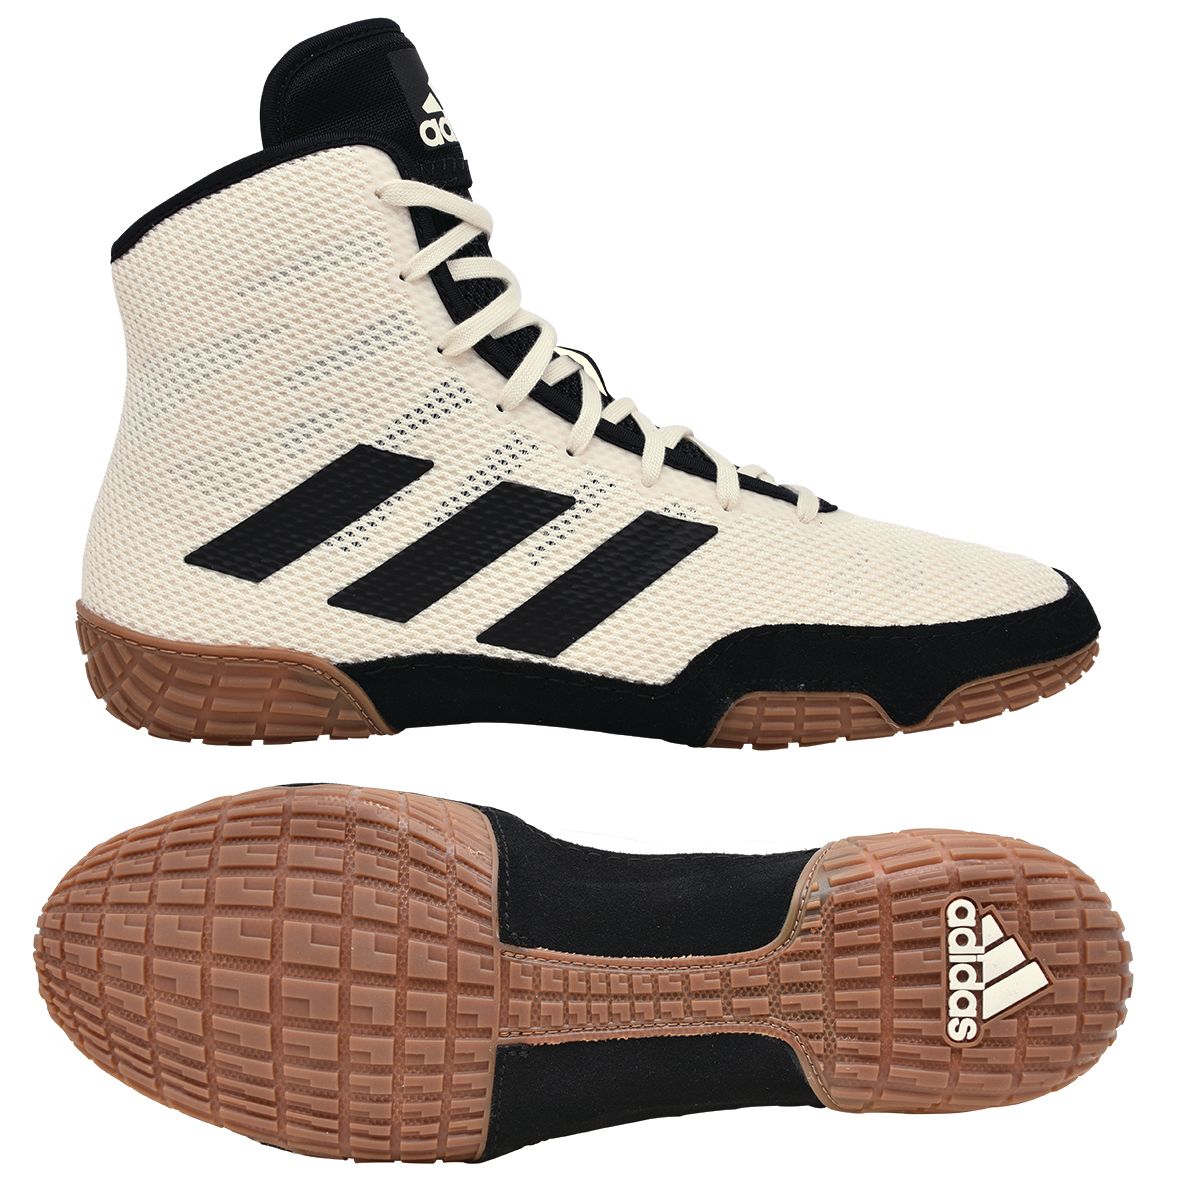 NEW - adidas Tech Fall 2.0 Wrestling Shoe, color: White/Black